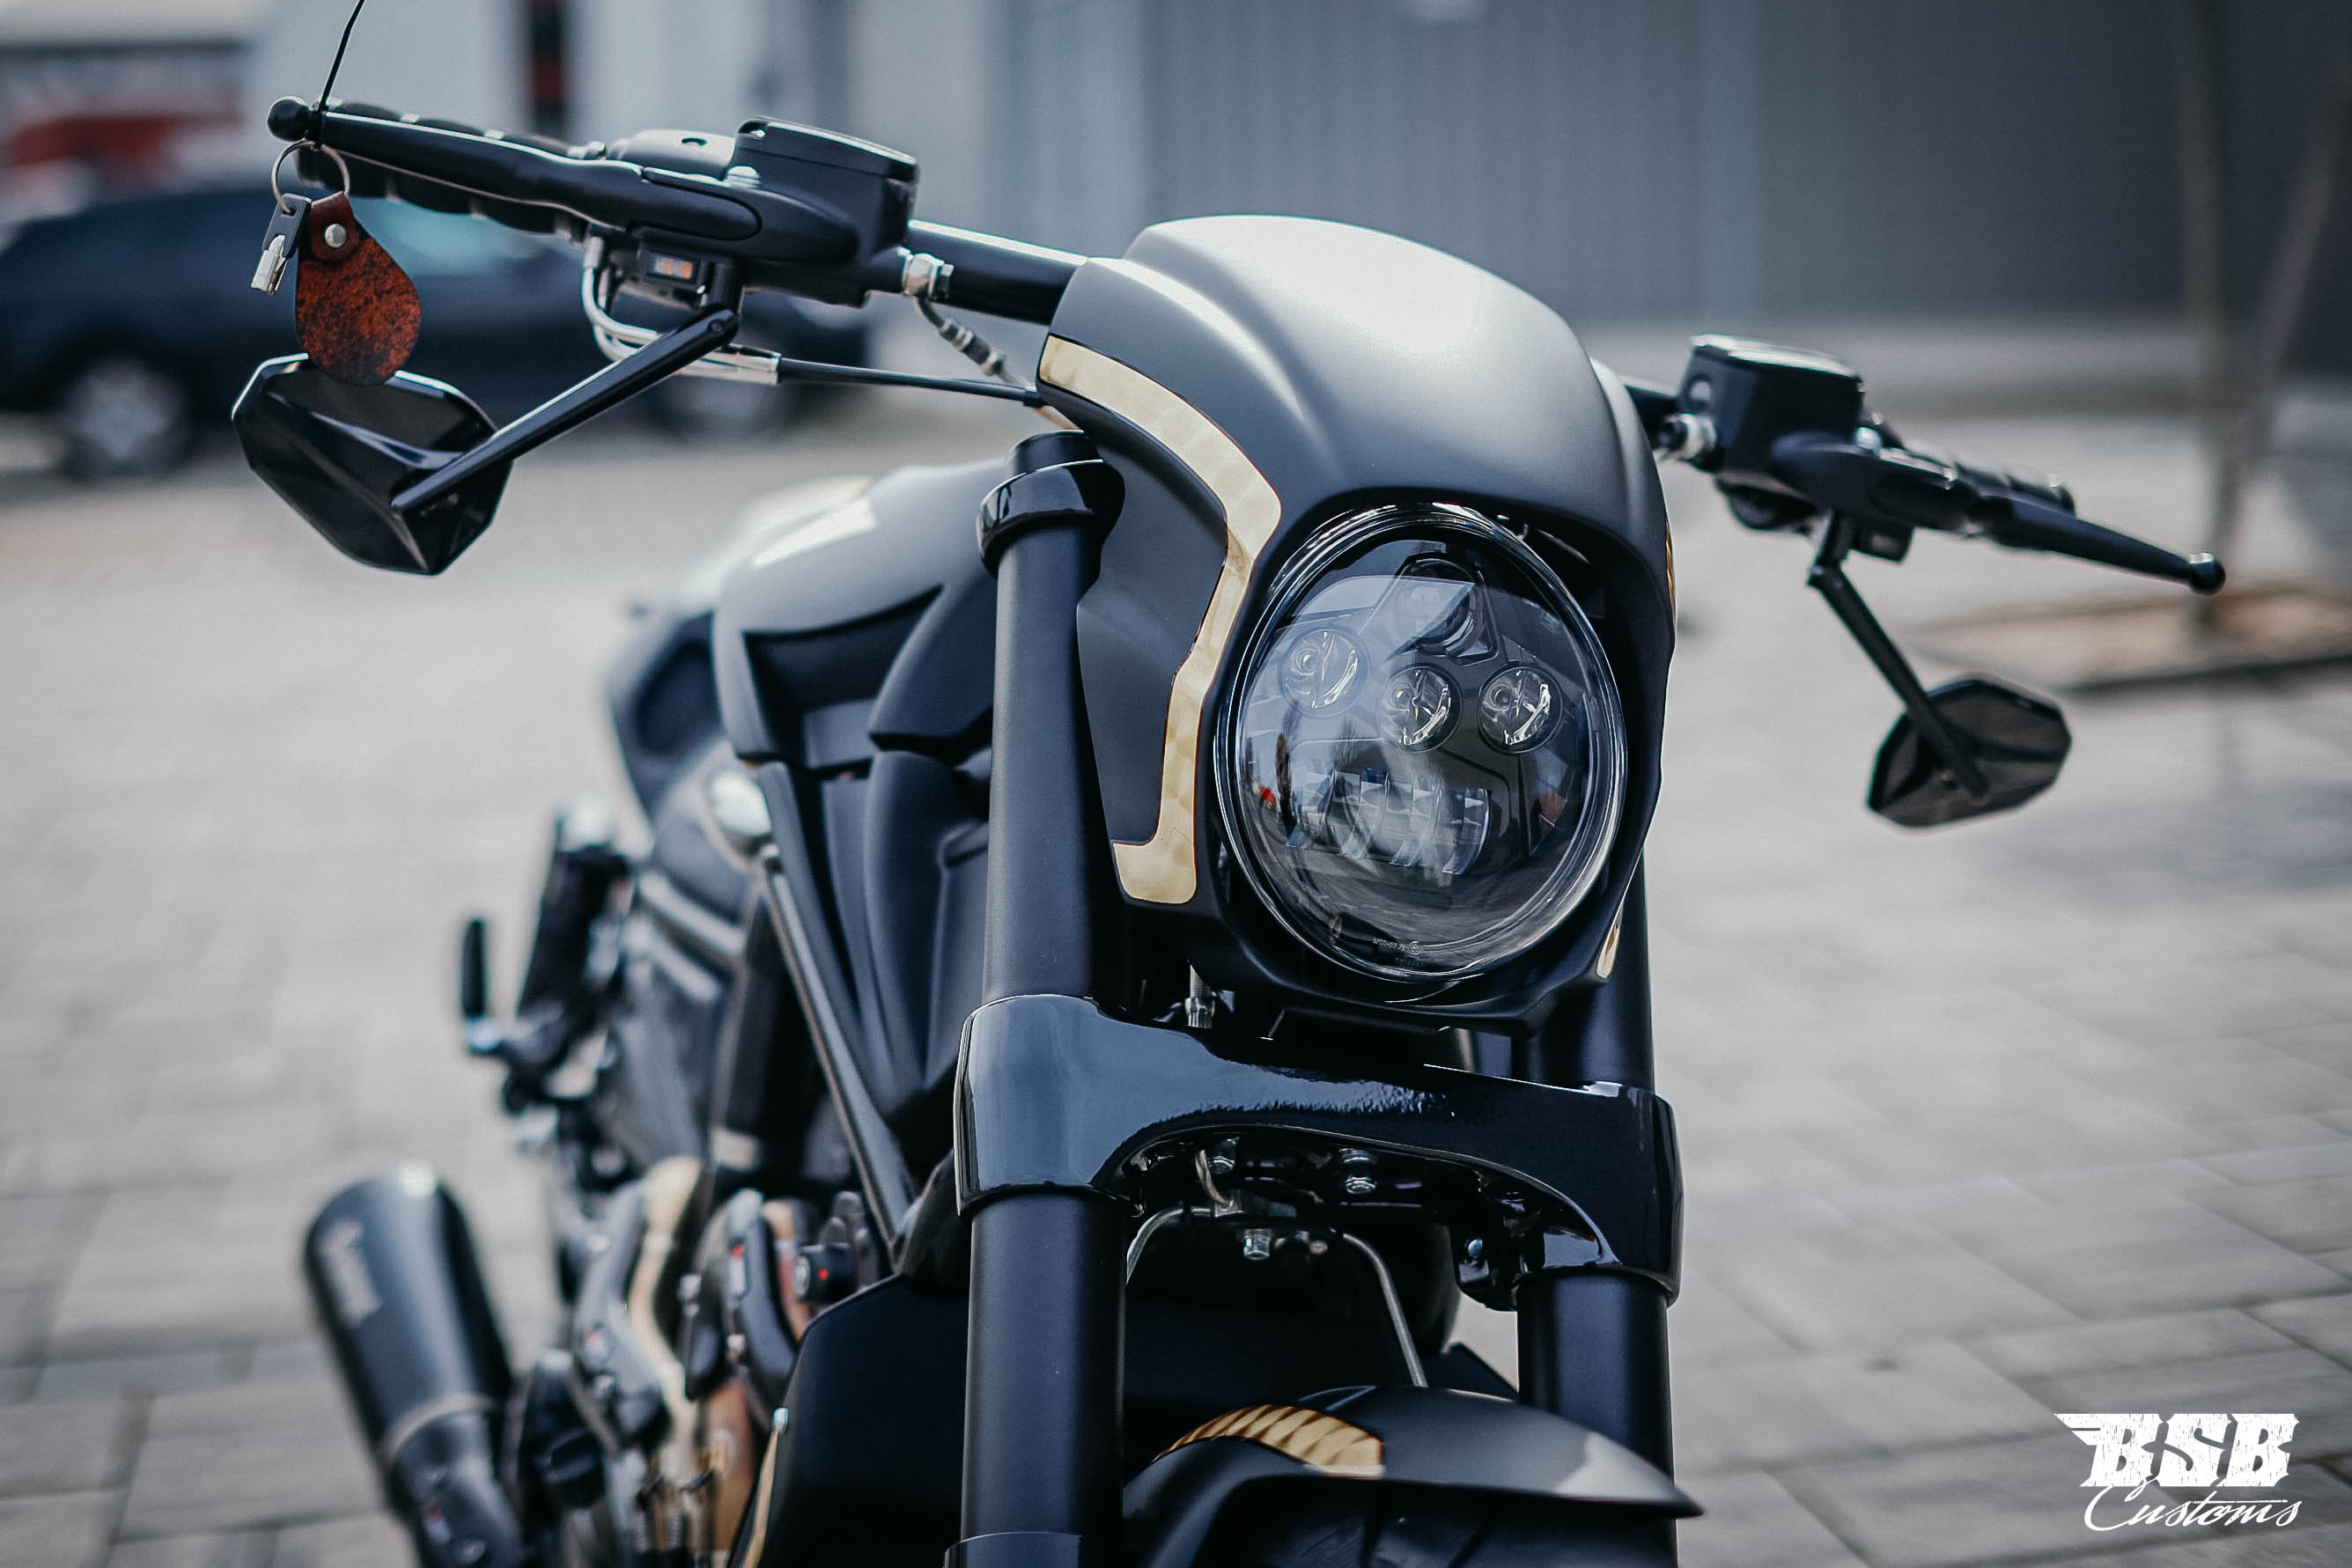 2016 Harley Davidson V-ROD VRSCF Muscle  ABS, edler Umbau 260-er Akrapovic KC Teile ... ab 300 EUR finanzieren